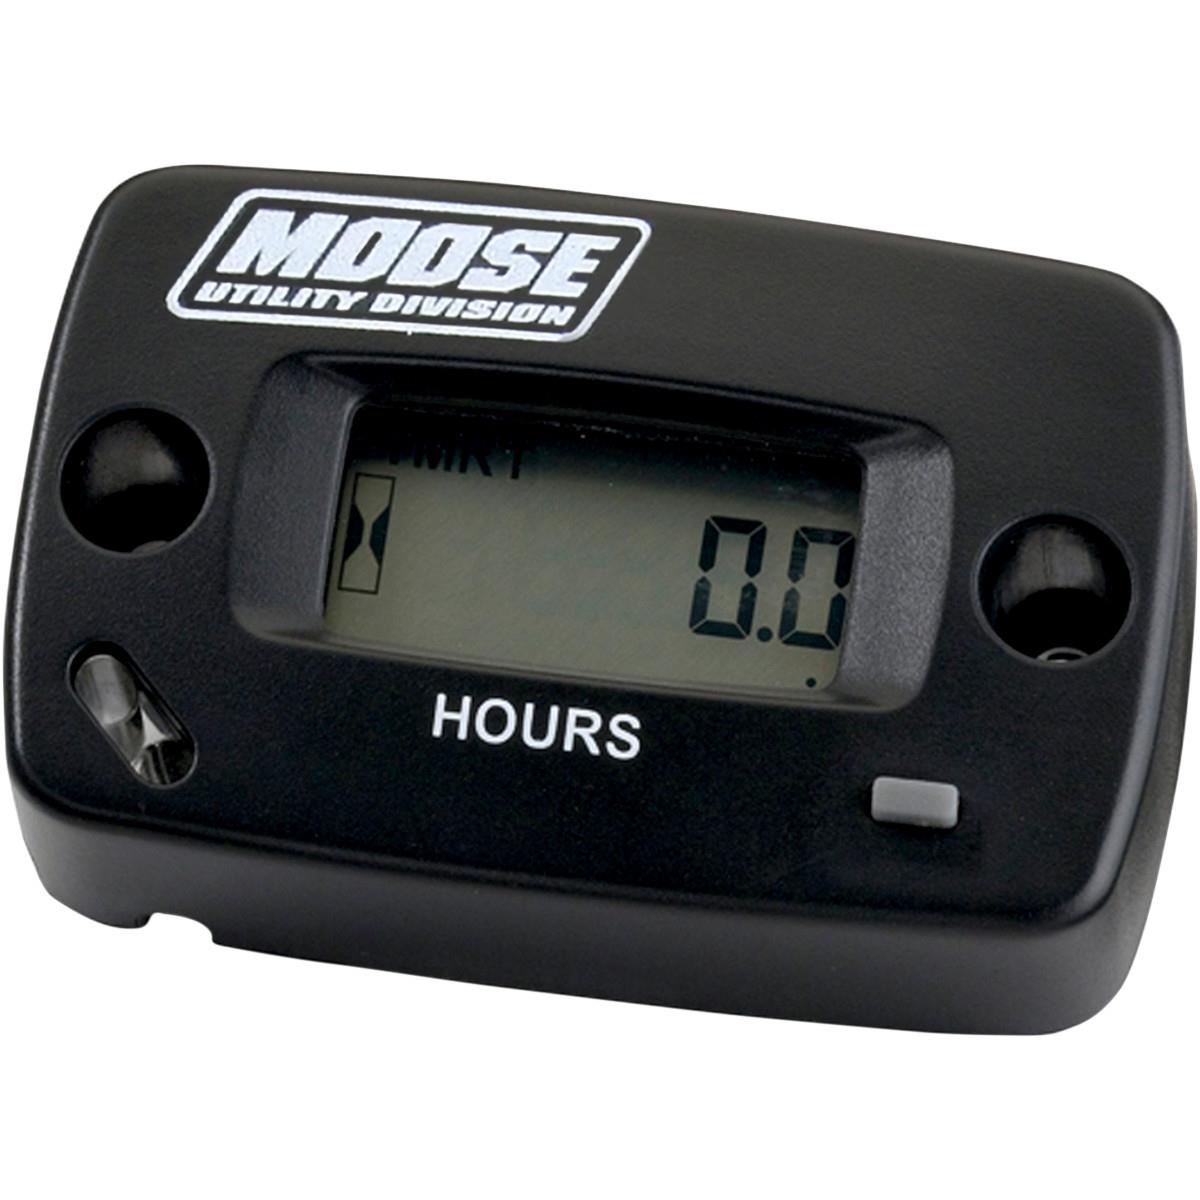 Moose Racing Betriebsstundenzähler  kabellos und rücksetzbar